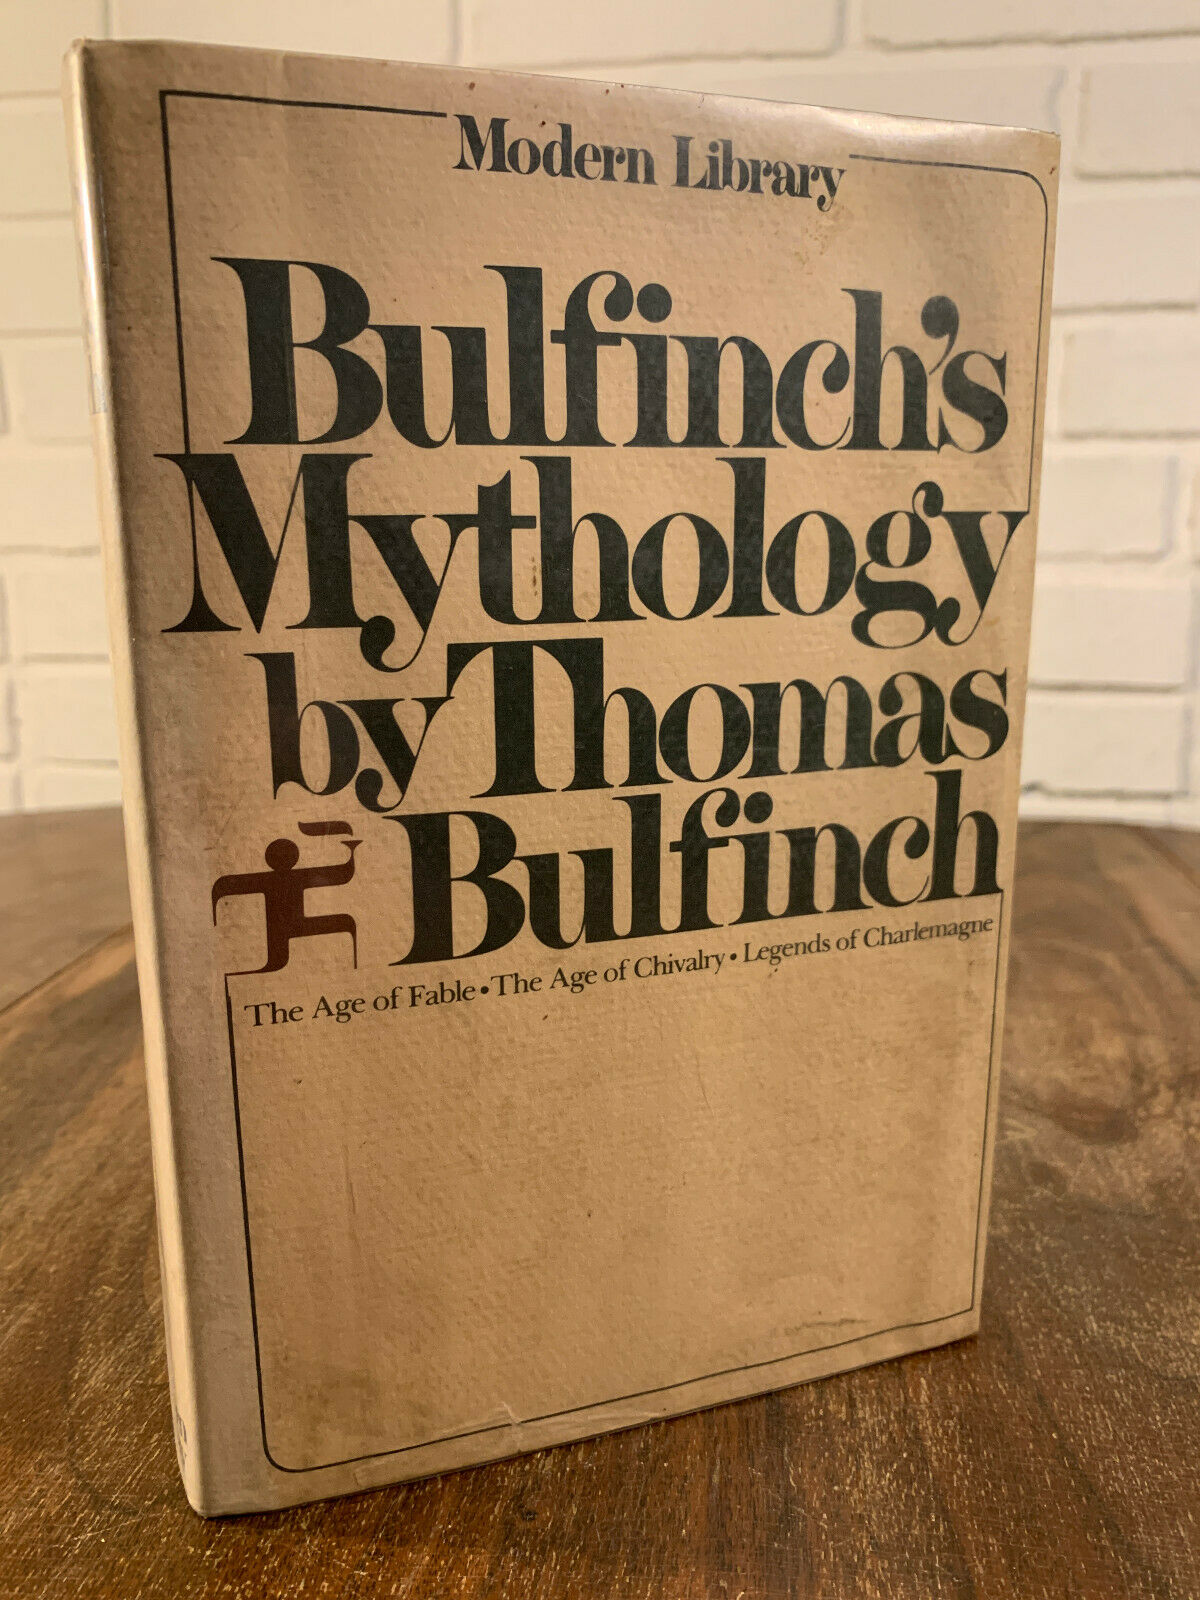 Bulfinch's Mythology by Thomas Bulfinch